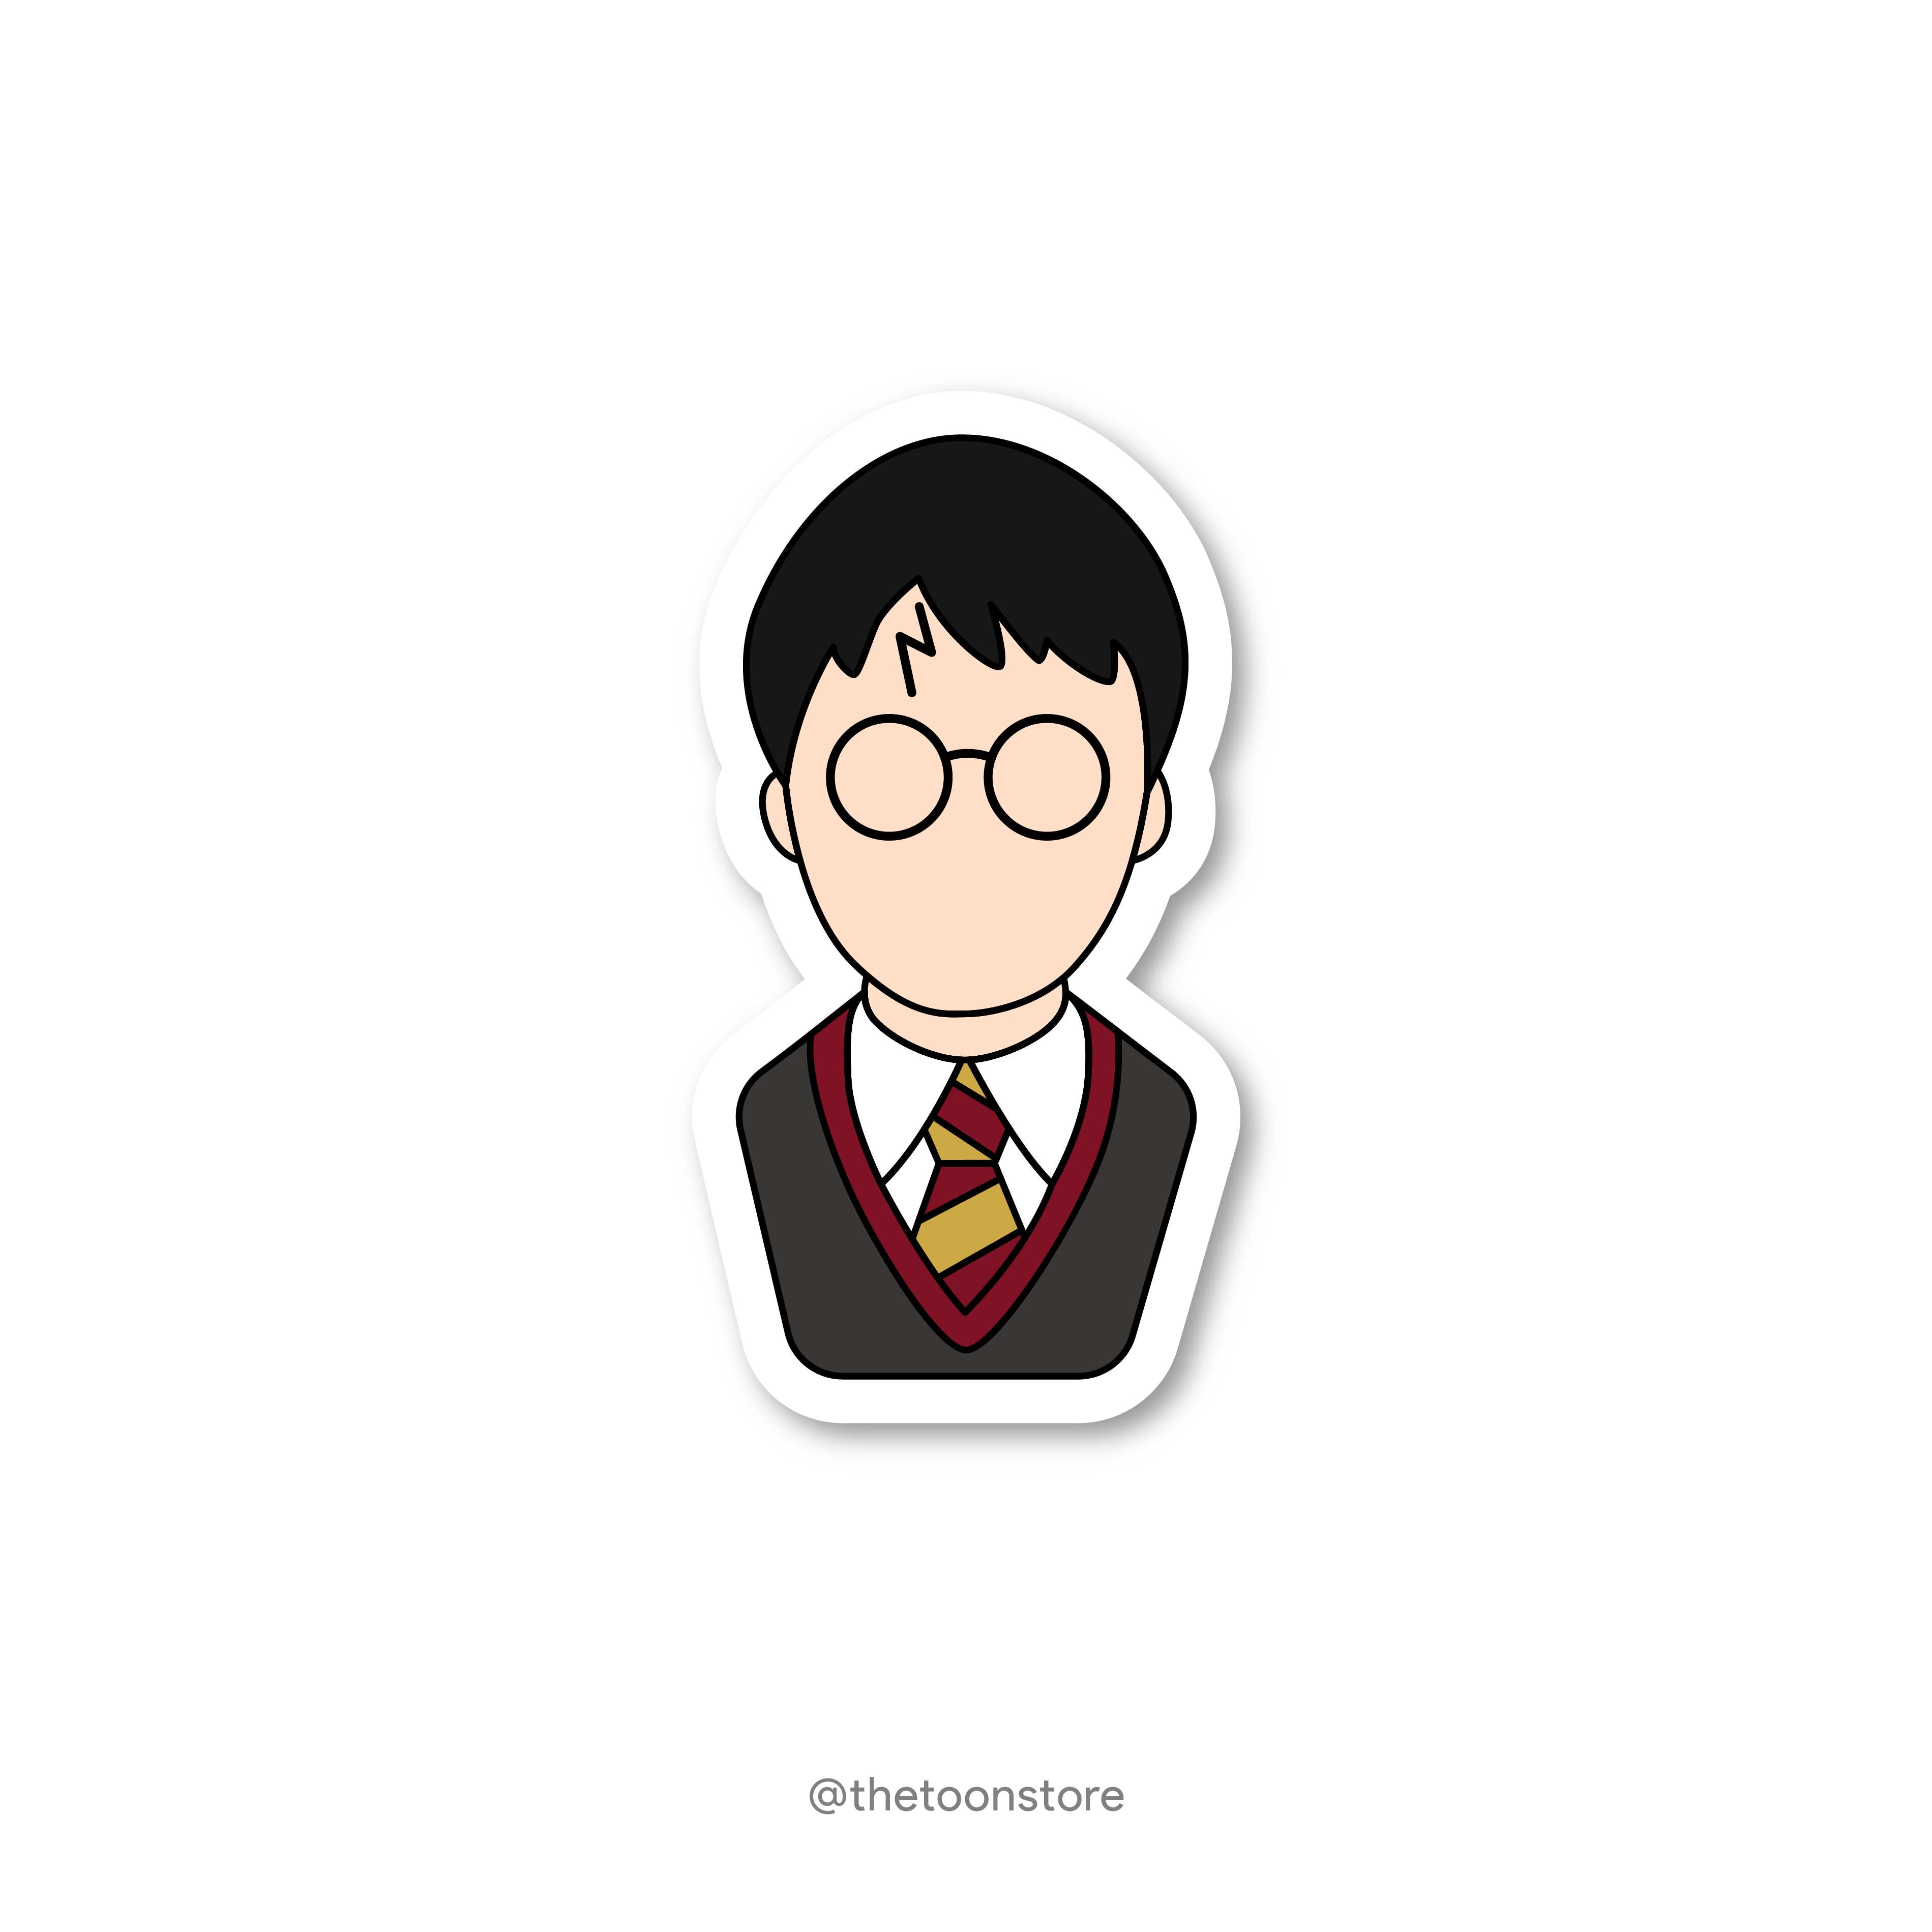 Harry Potter character - Harry Potter Sticker